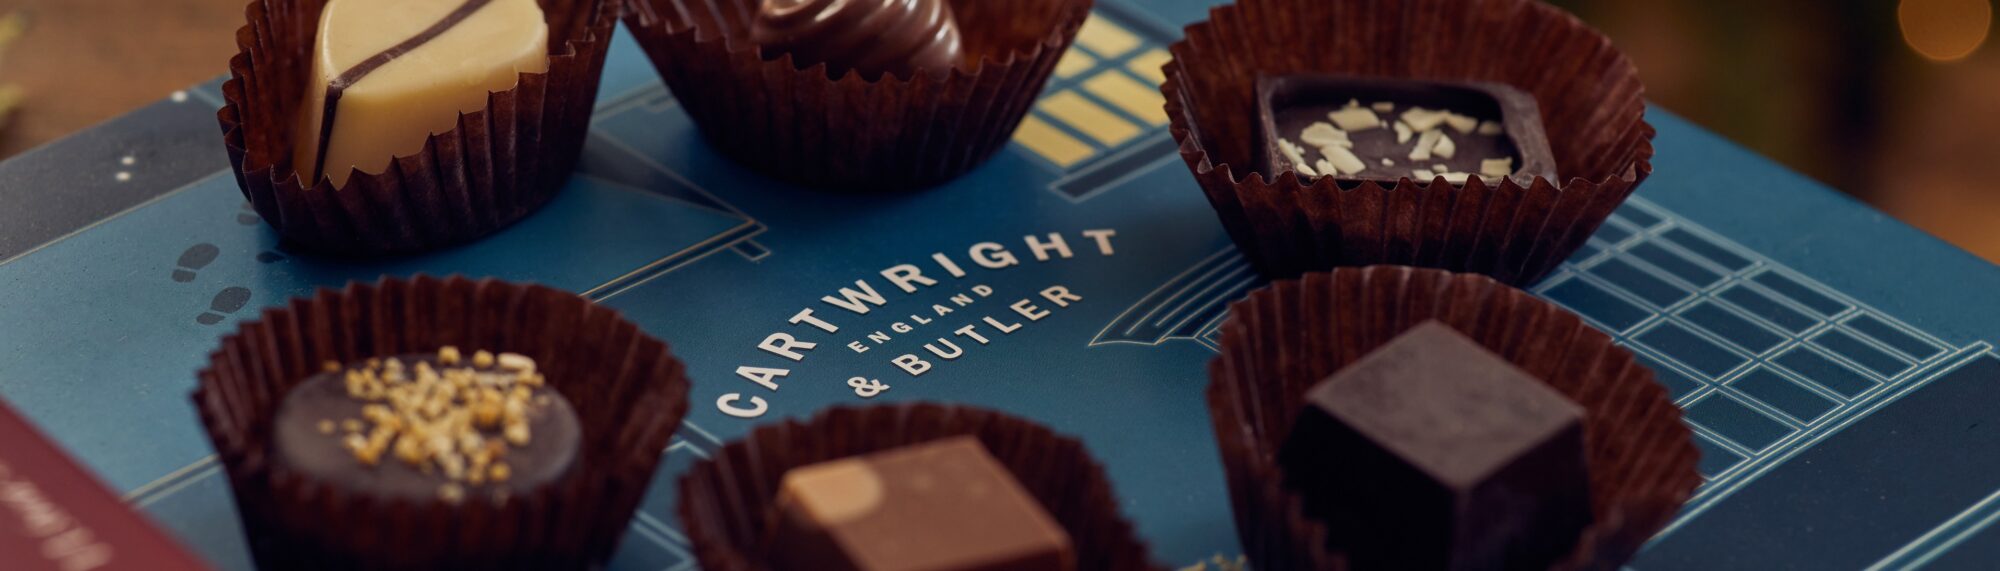 chocolates from the Cartwright & Butler advent calendar